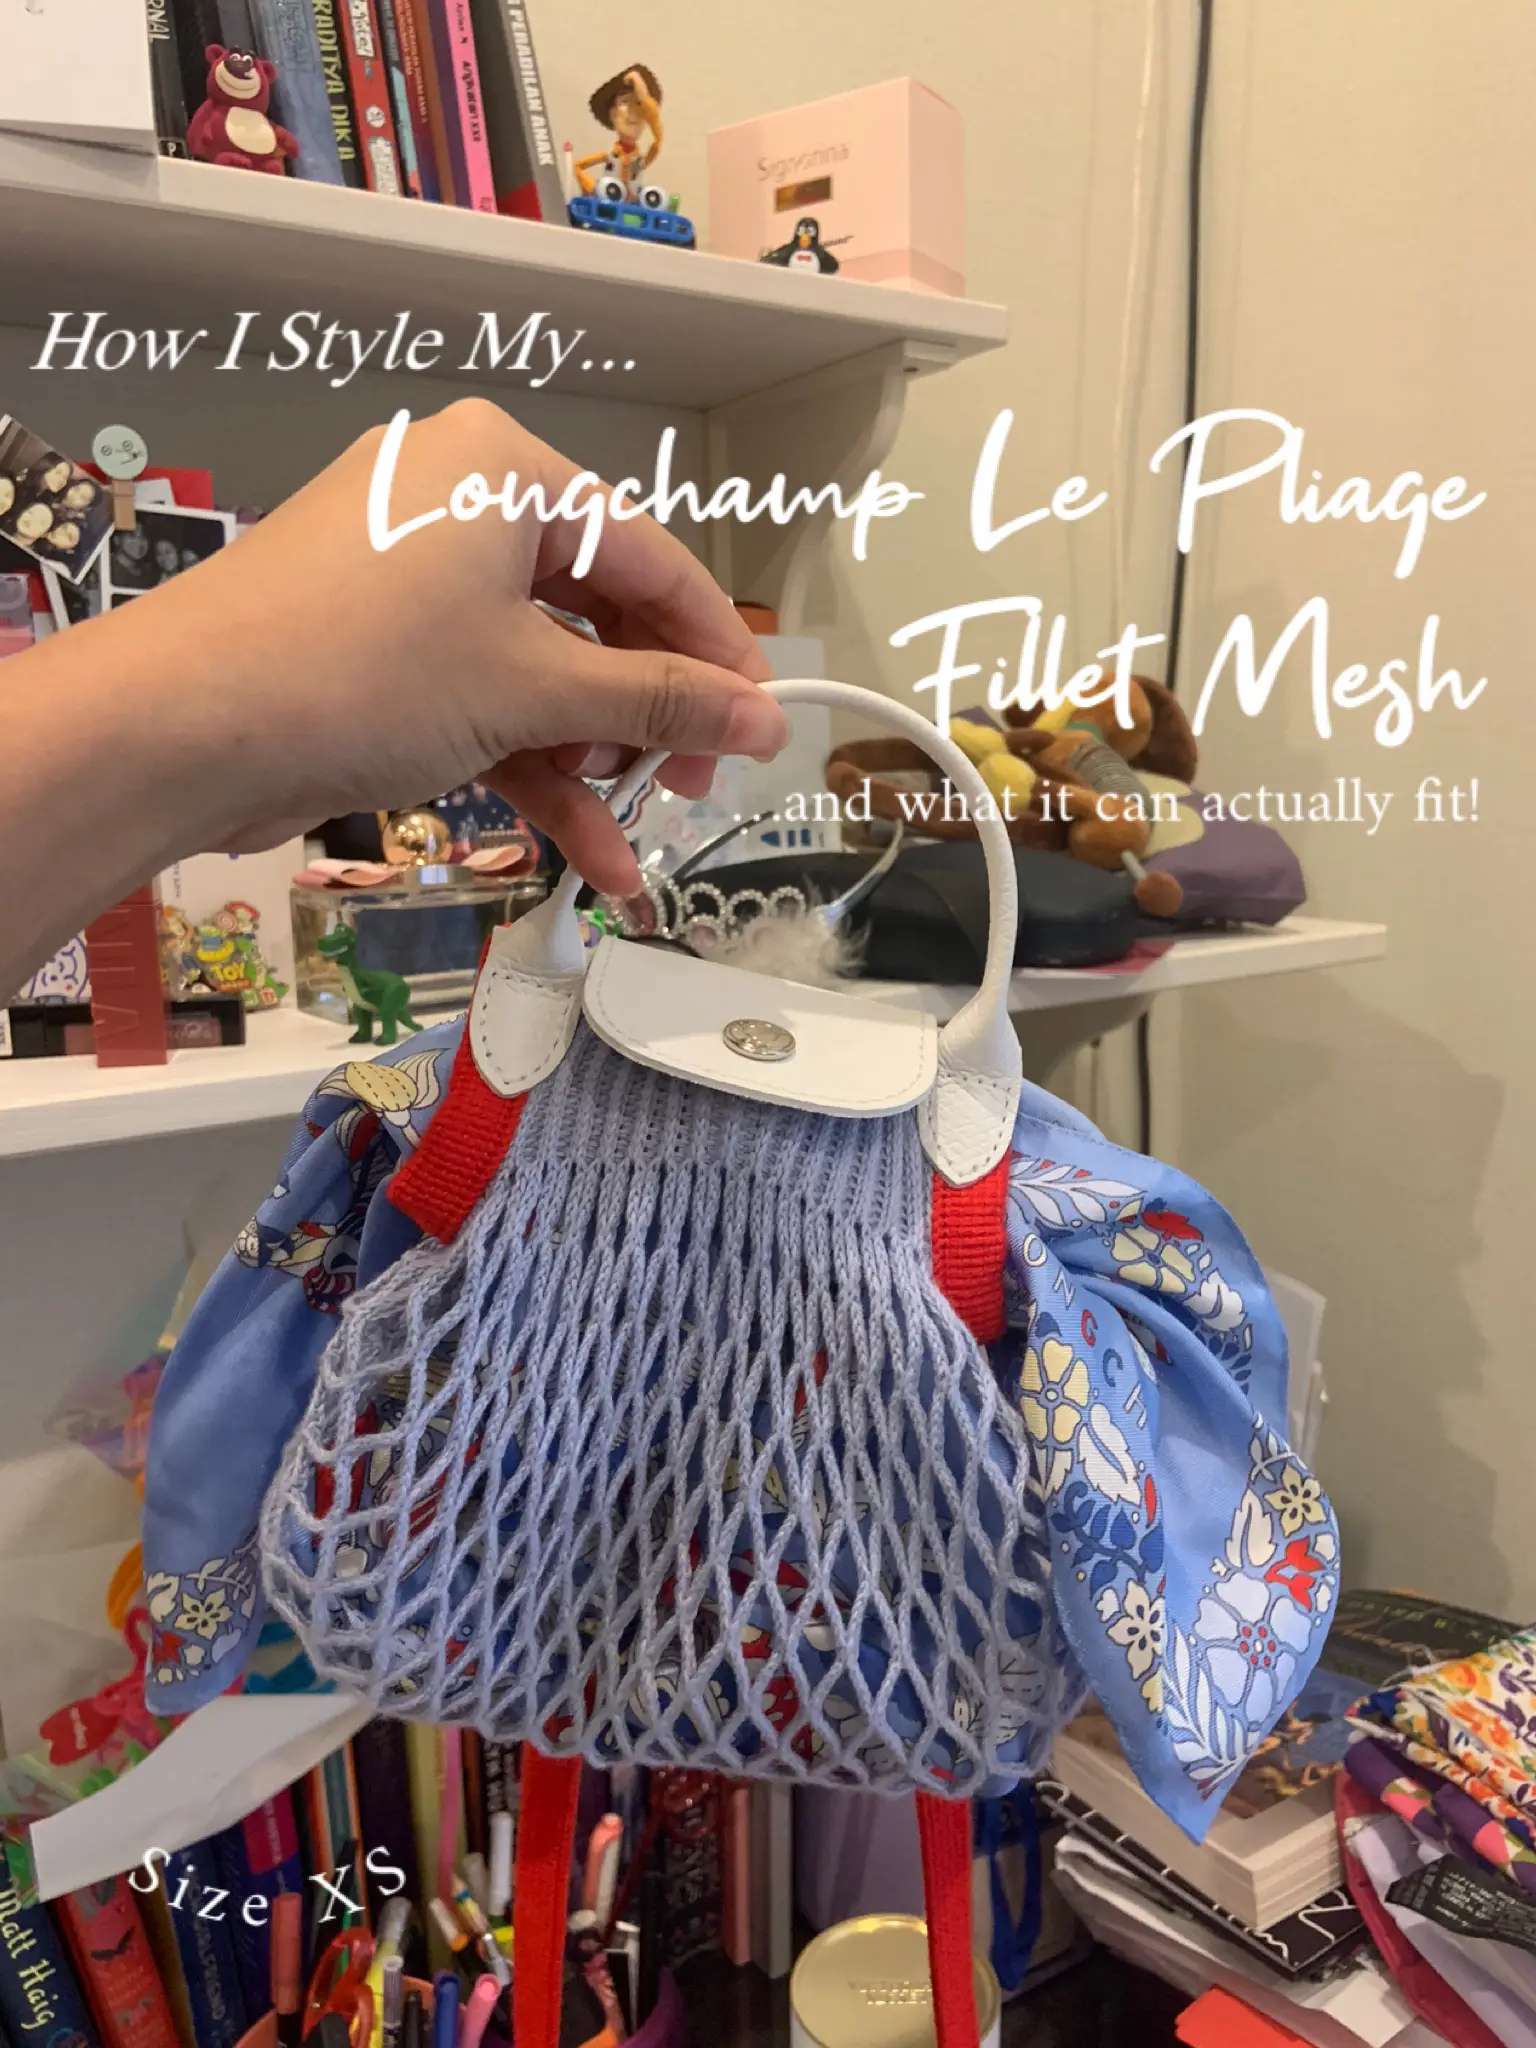 How I Style My Longchamp Le Pliage Fillet Mesh Bag, Video published by  Nabila Alwini